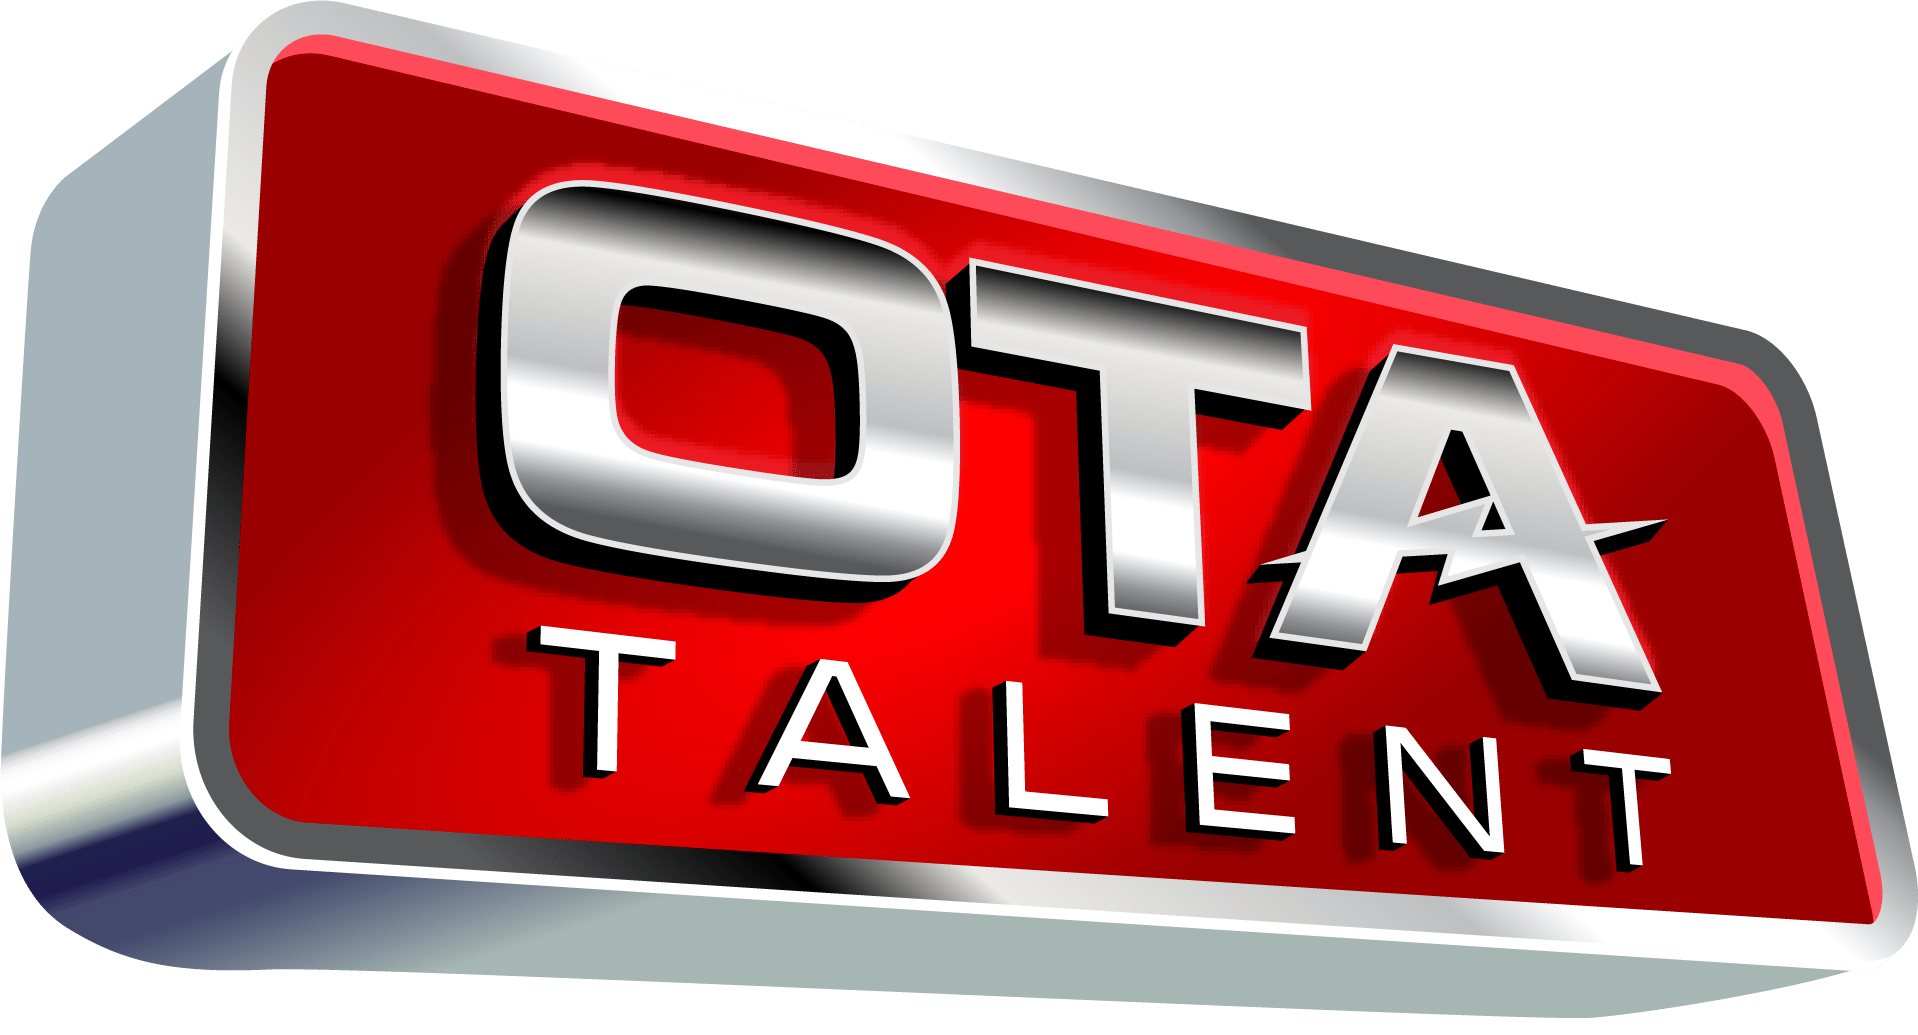 The OTA Talent Logo